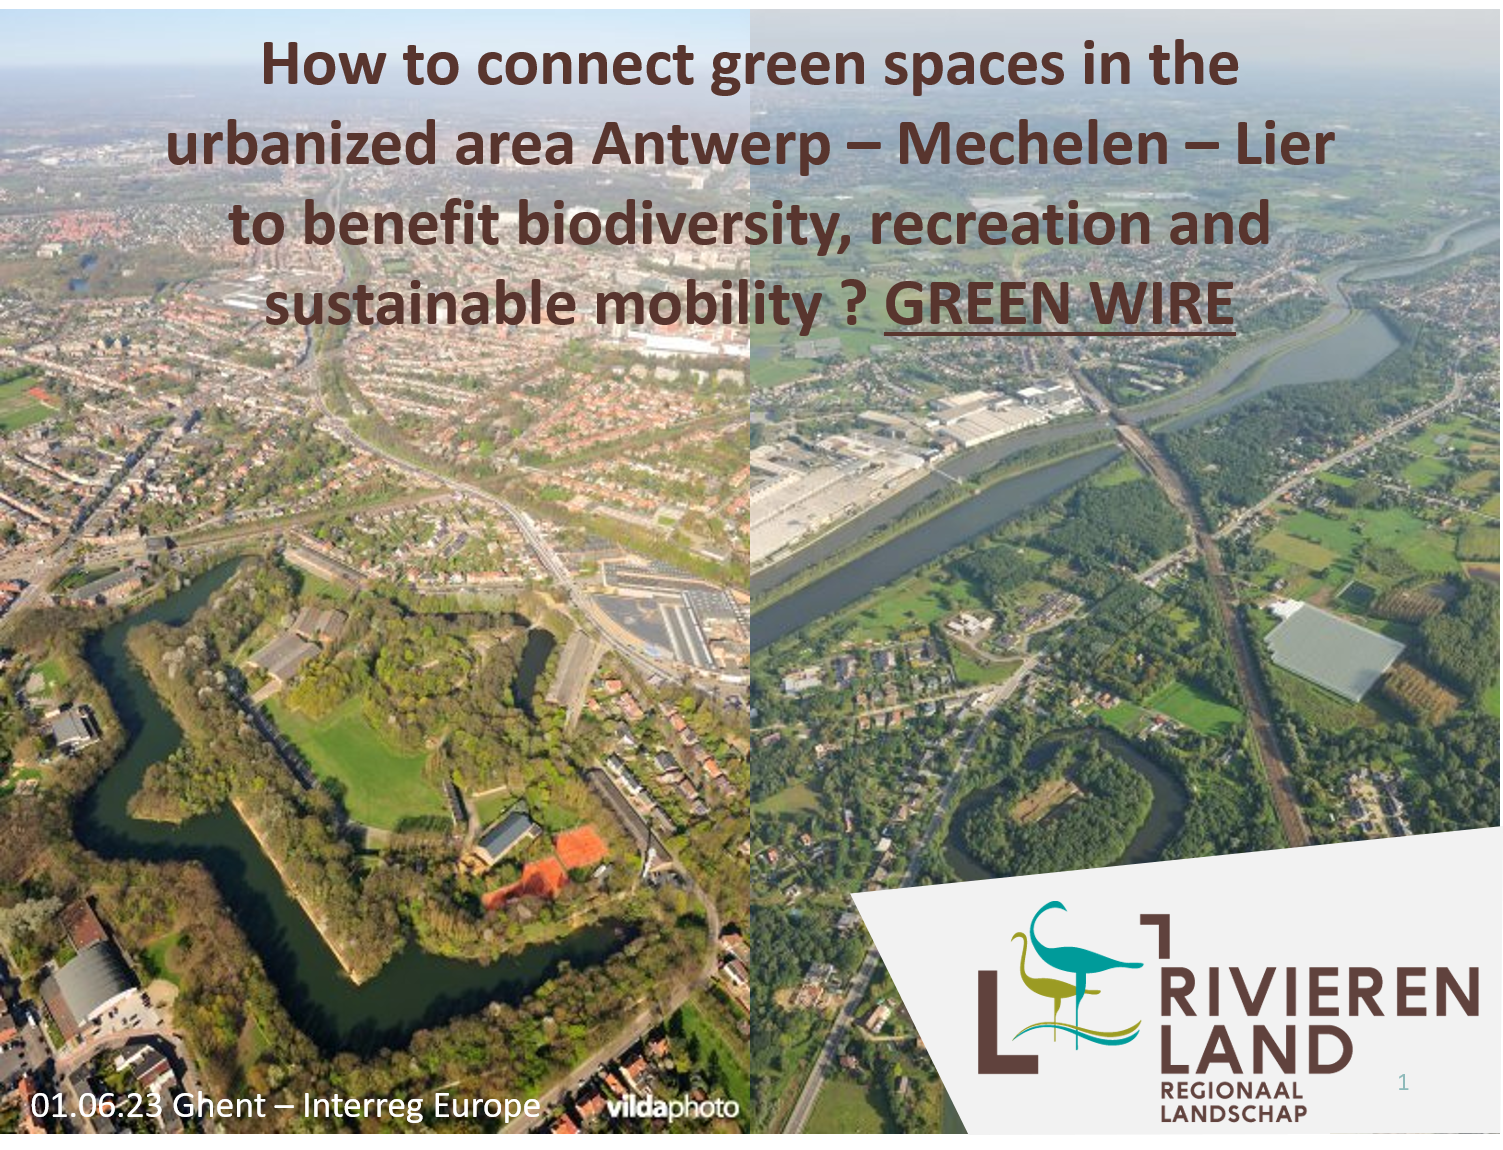 Connecting green spaces in Antwerp region